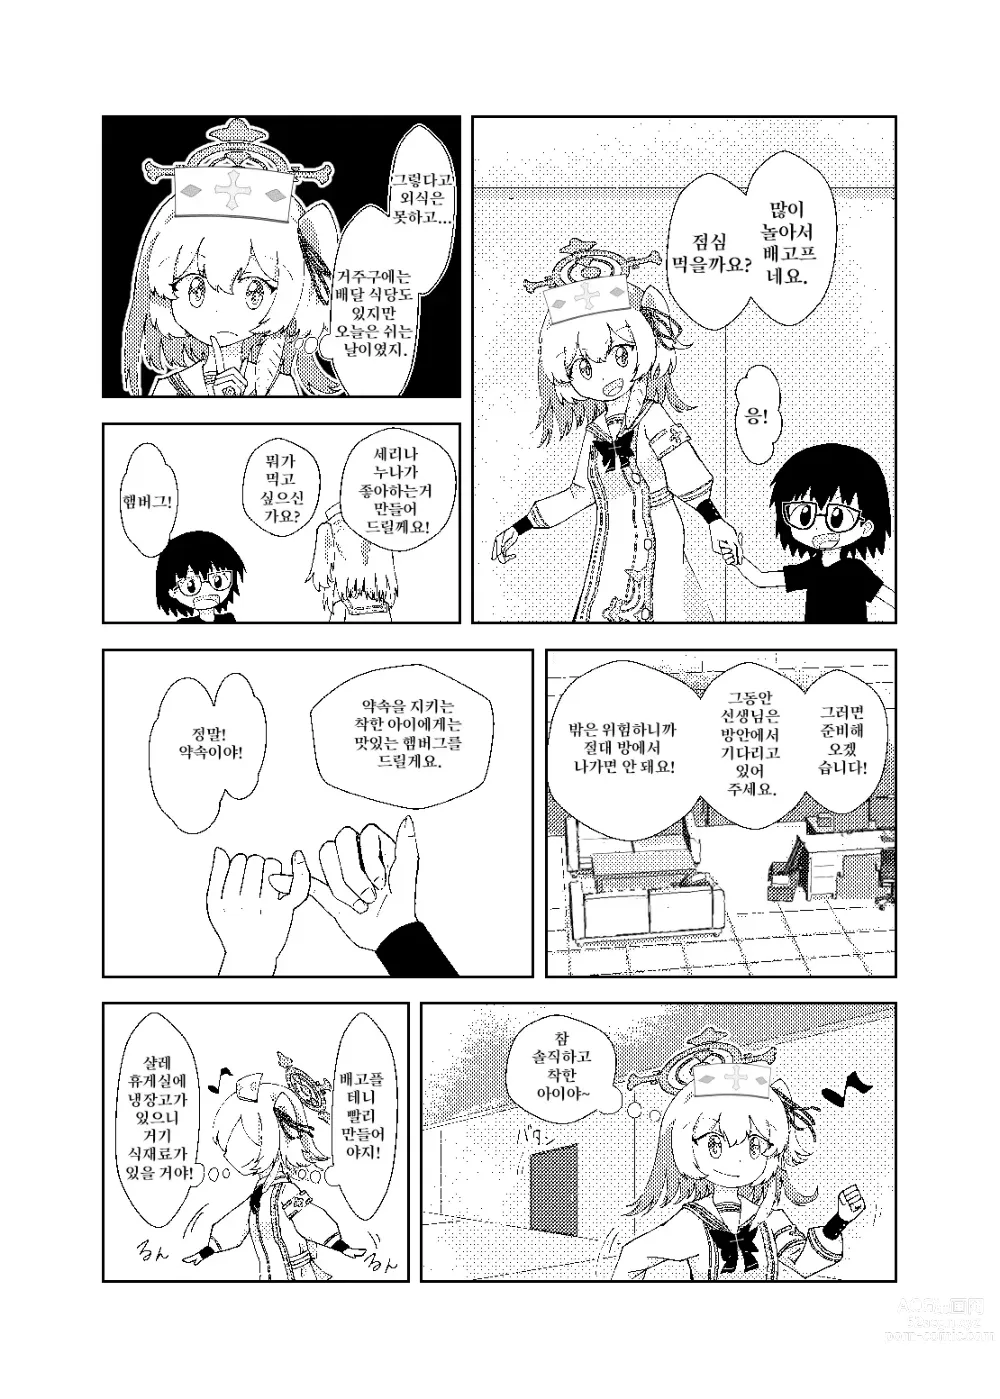 Page 7 of doujinshi 세리나가 유아화 선생님을 간호하는 이야기